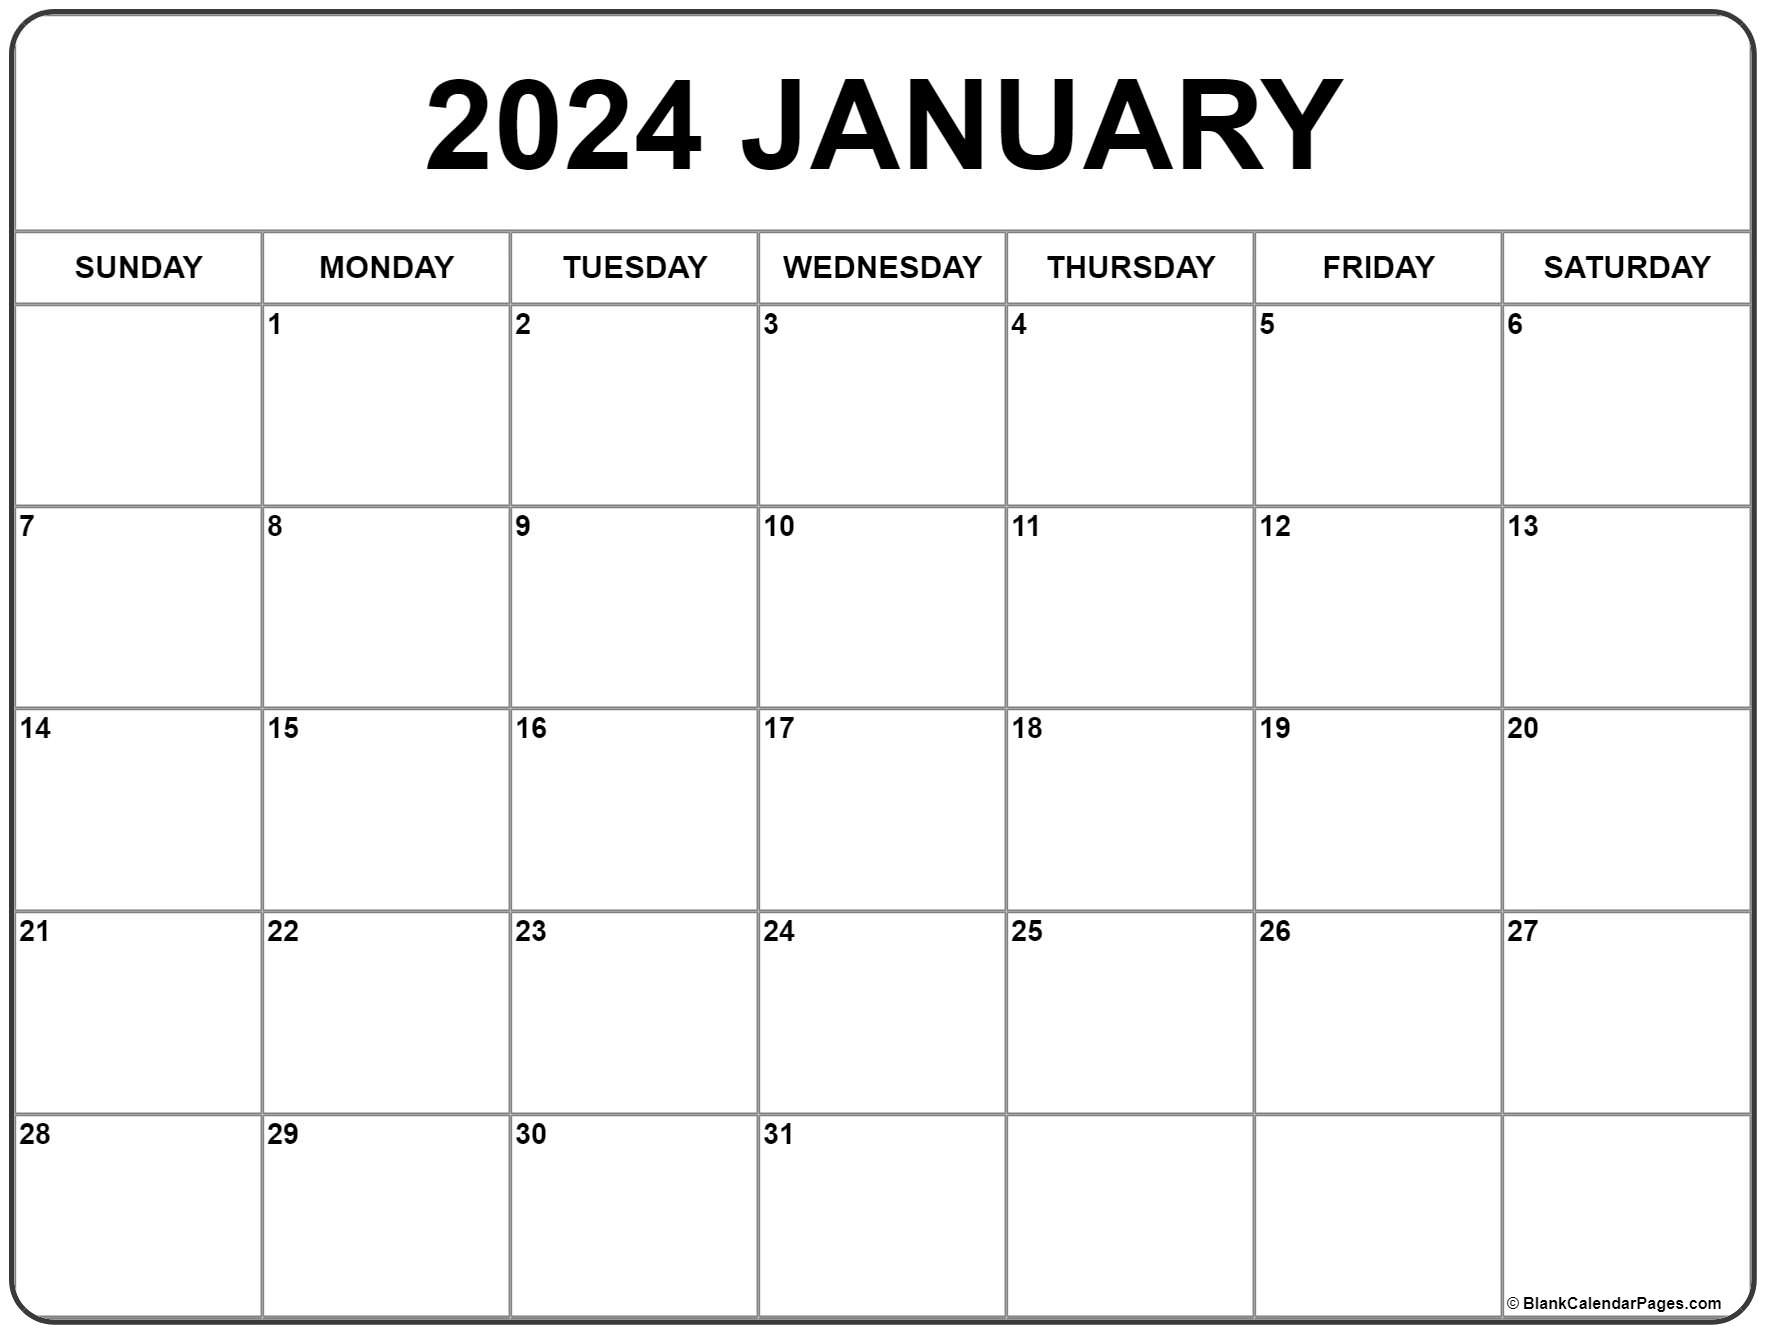 January 2024 Calendar | Free Printable Calendar for January 2024 Blank Printable Calendar